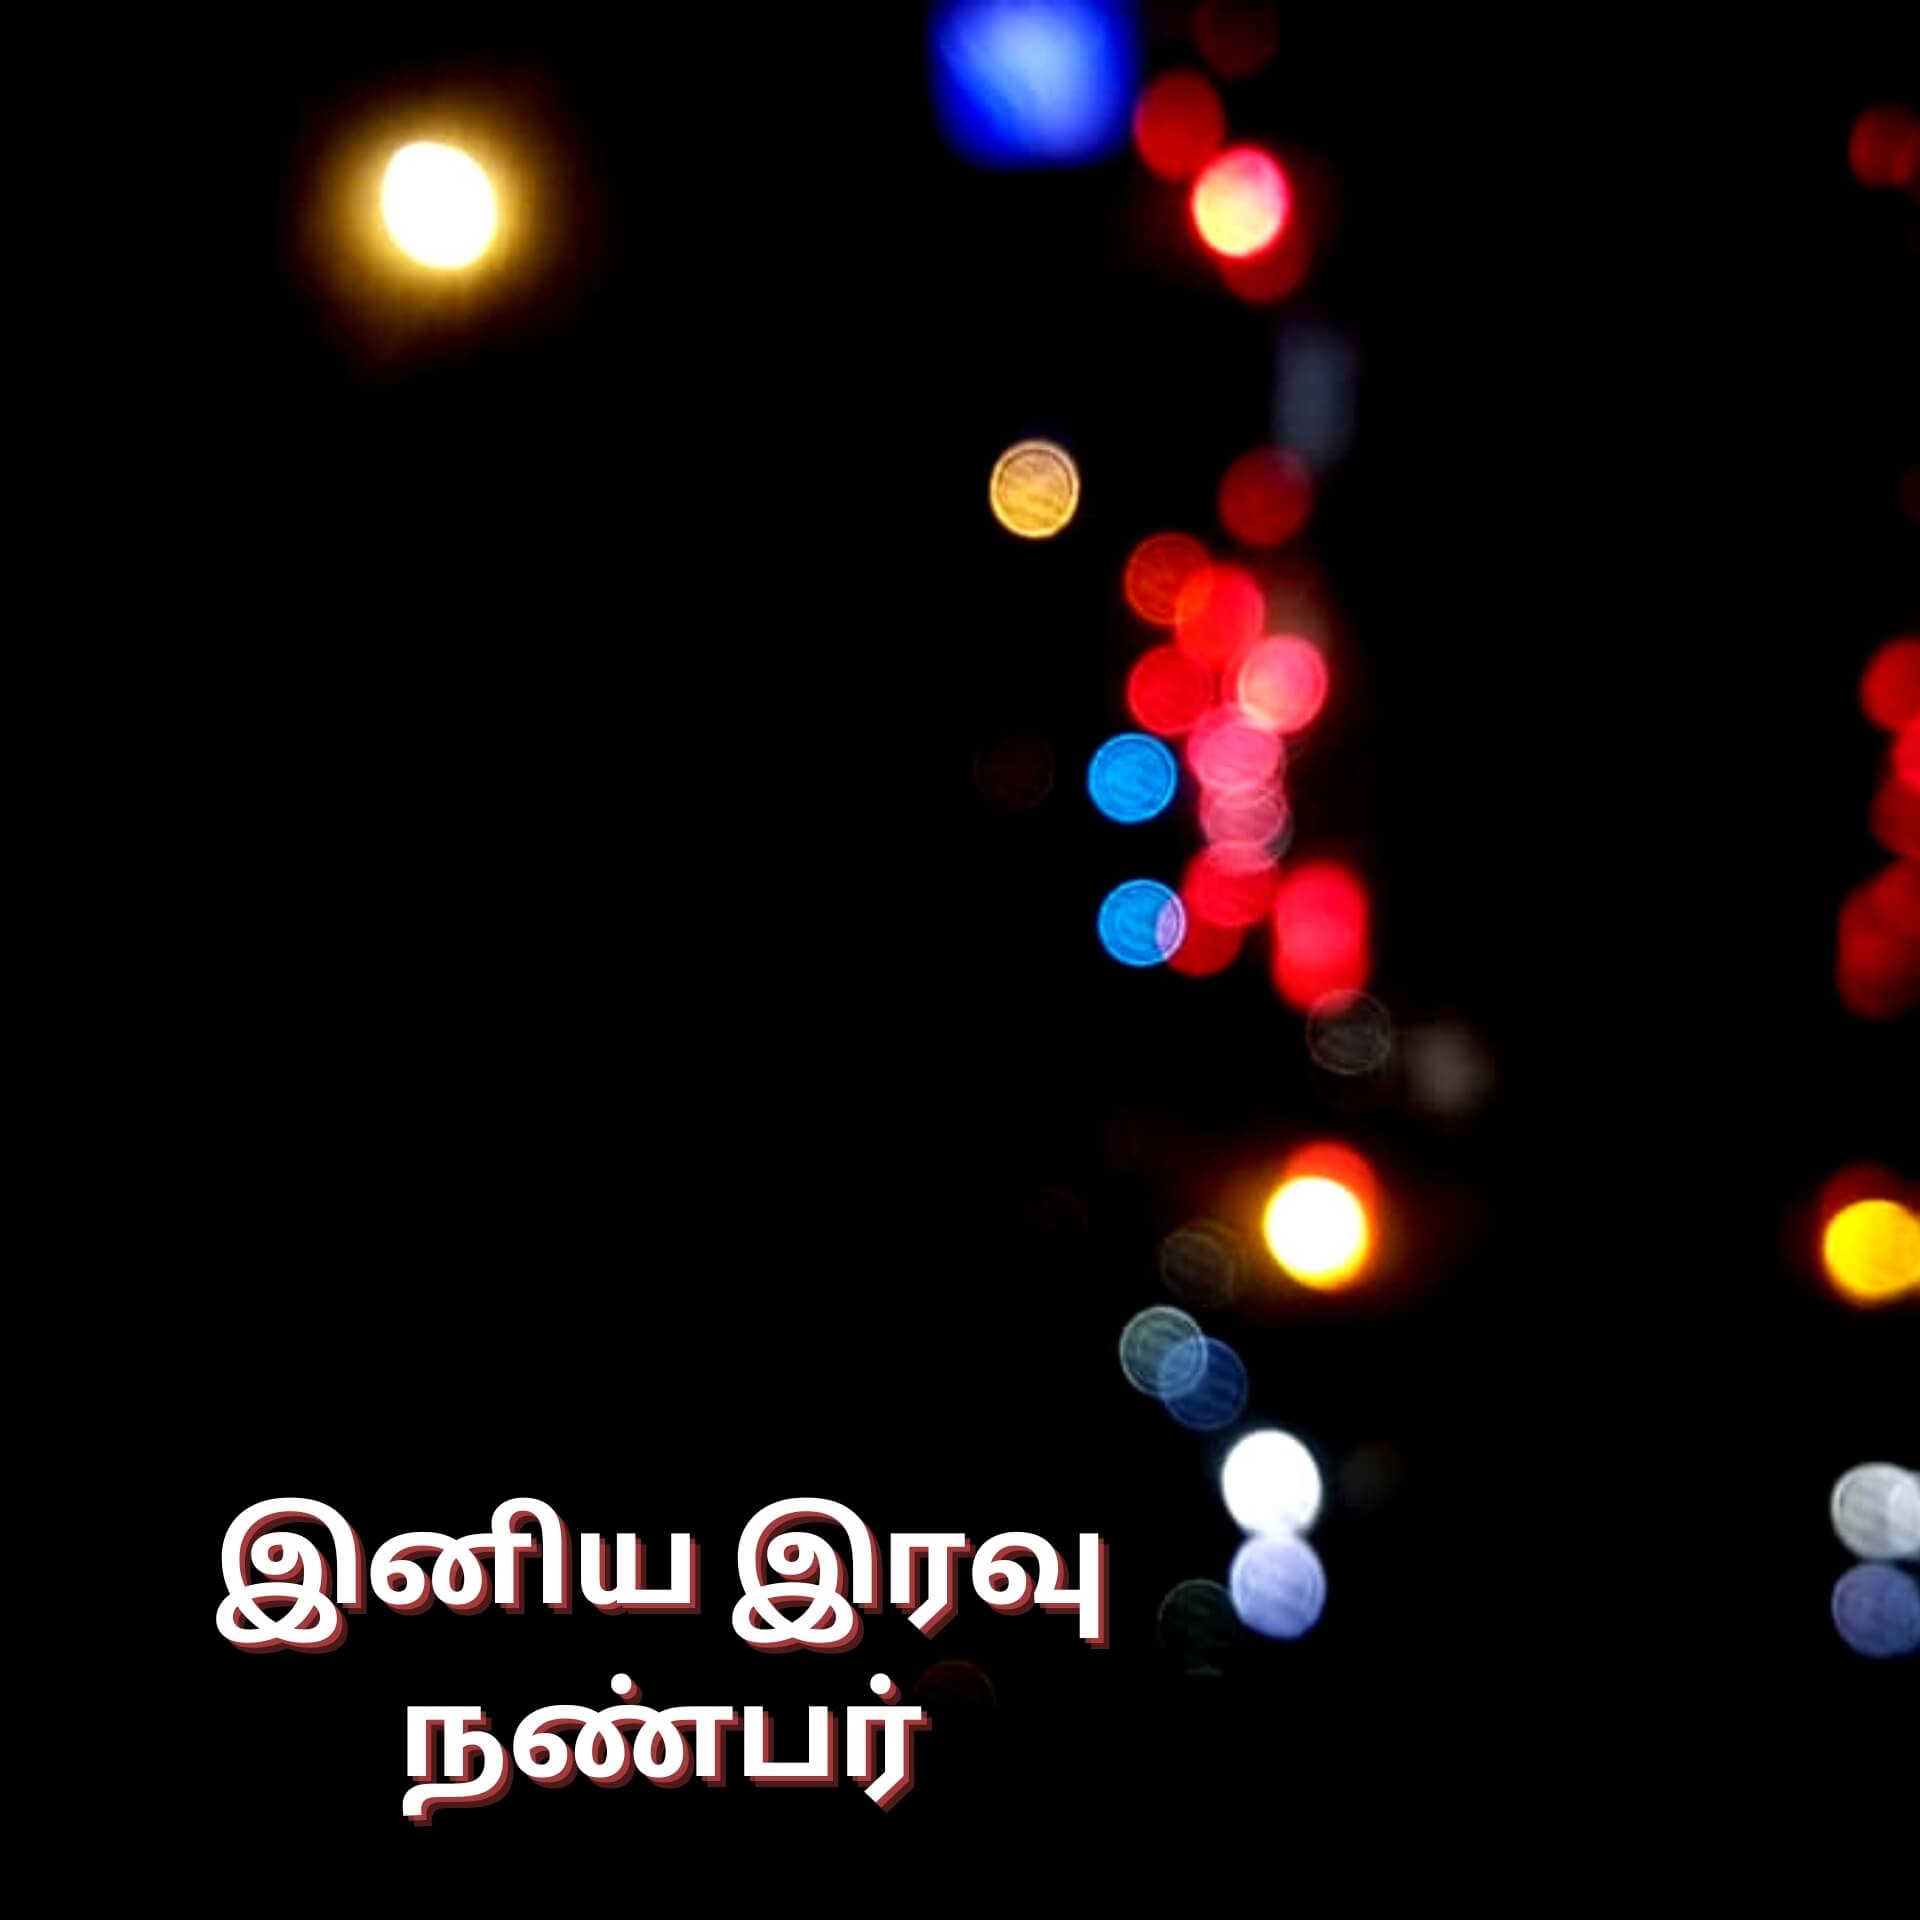 Tamil Good Night Pics images Download Wallpaper Free 1